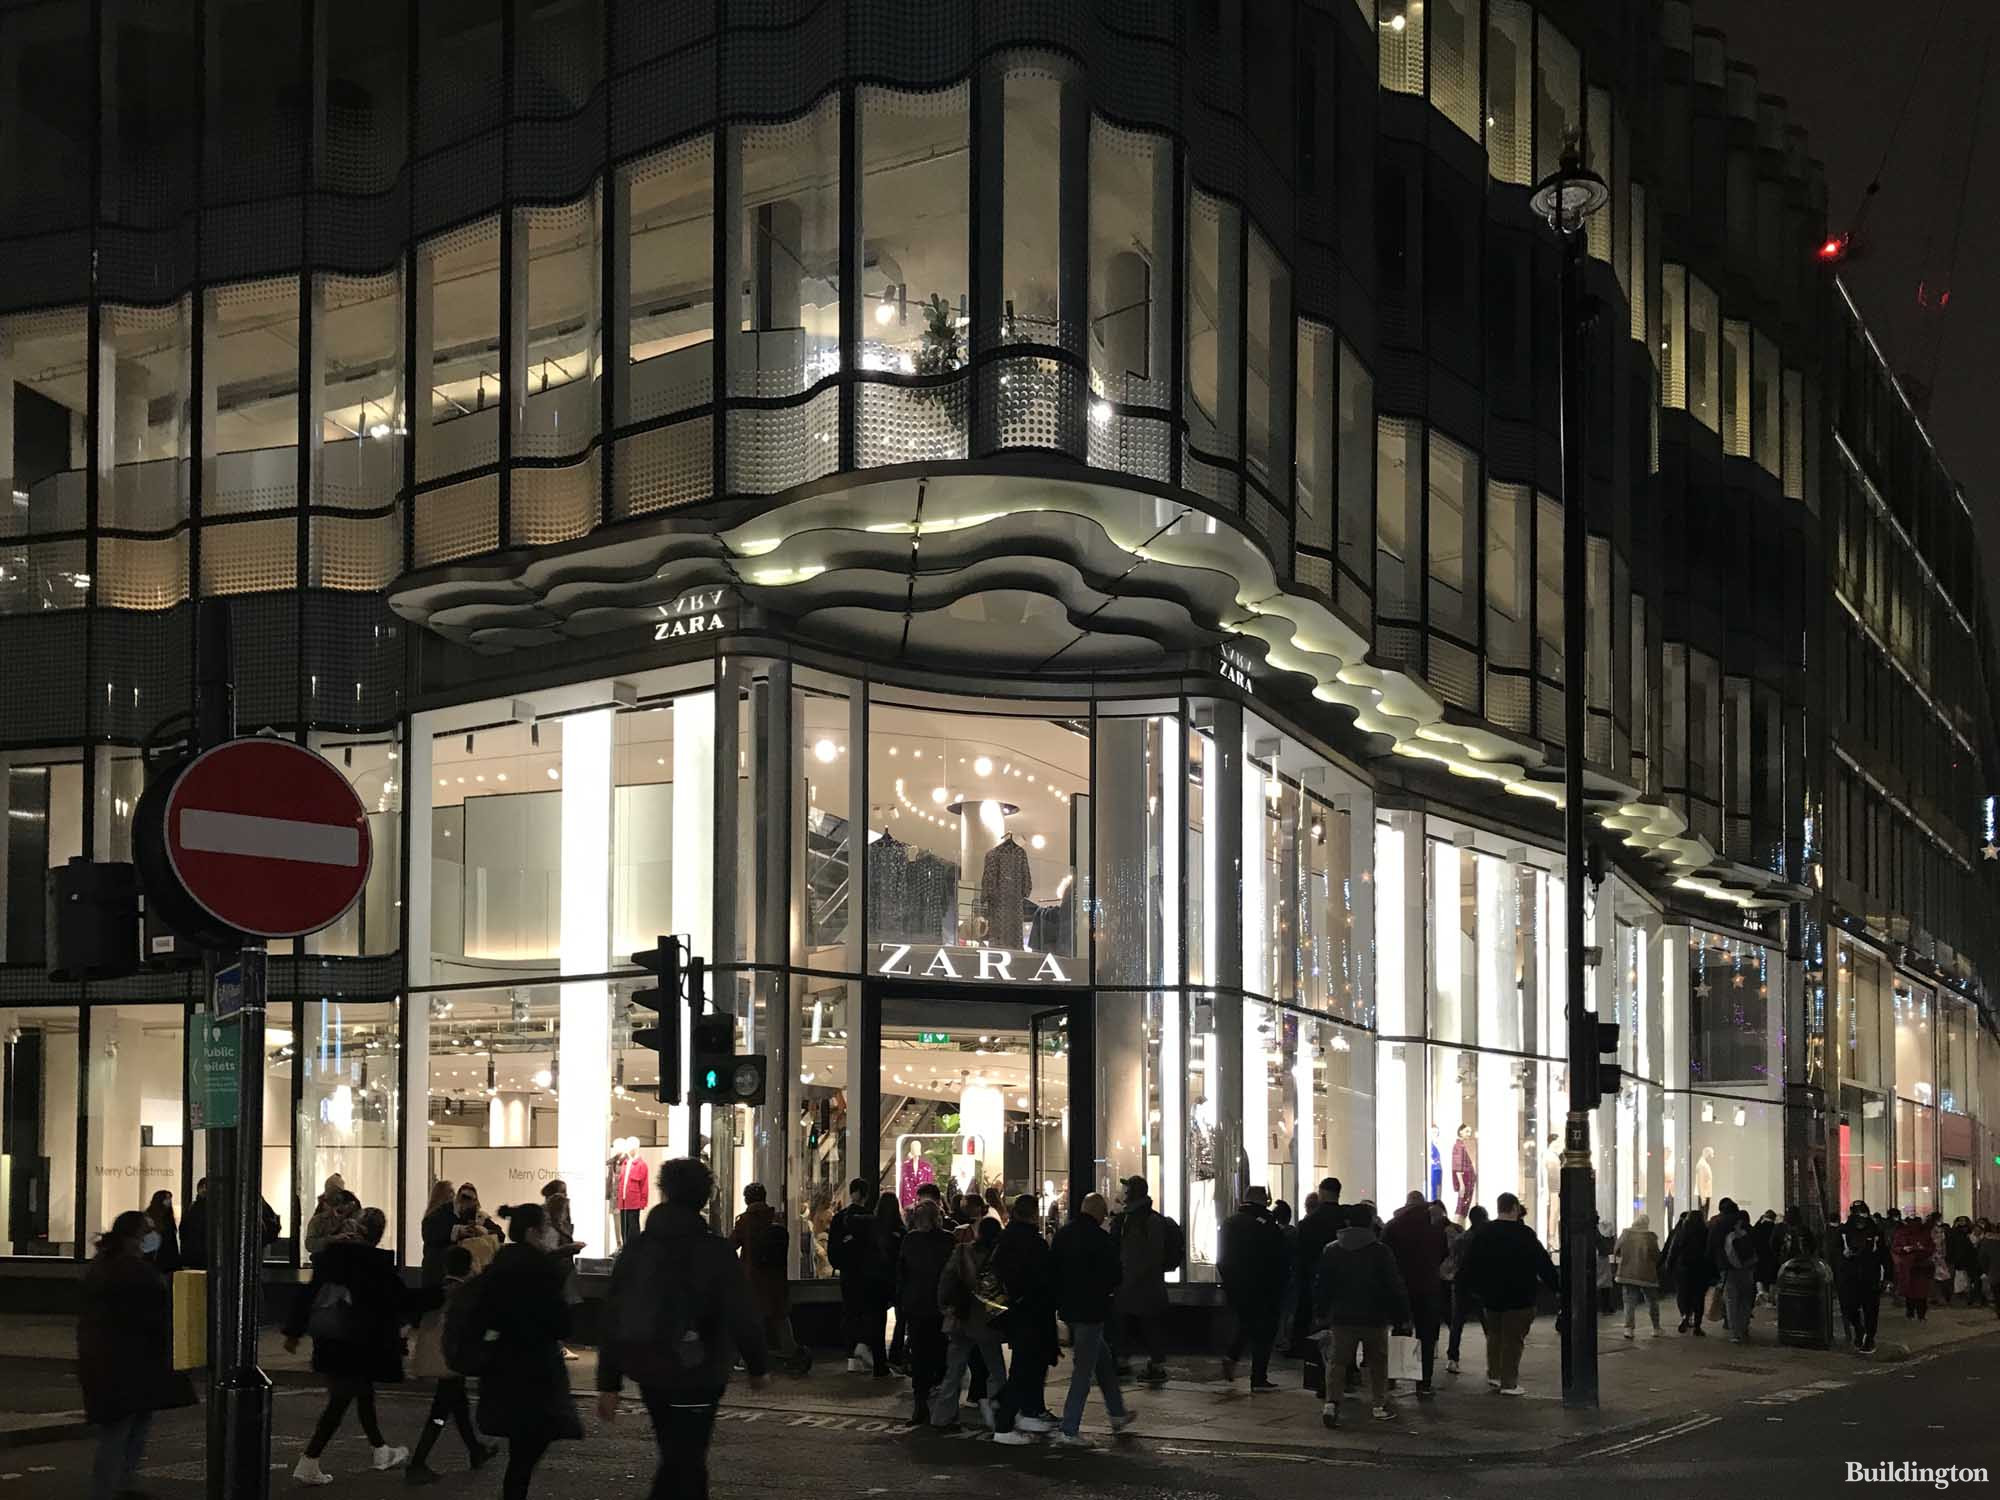 61 Oxford Street/11 Soho Street building at night. Entrance to Zara store on the corner of Soho Street and Oxford Street.